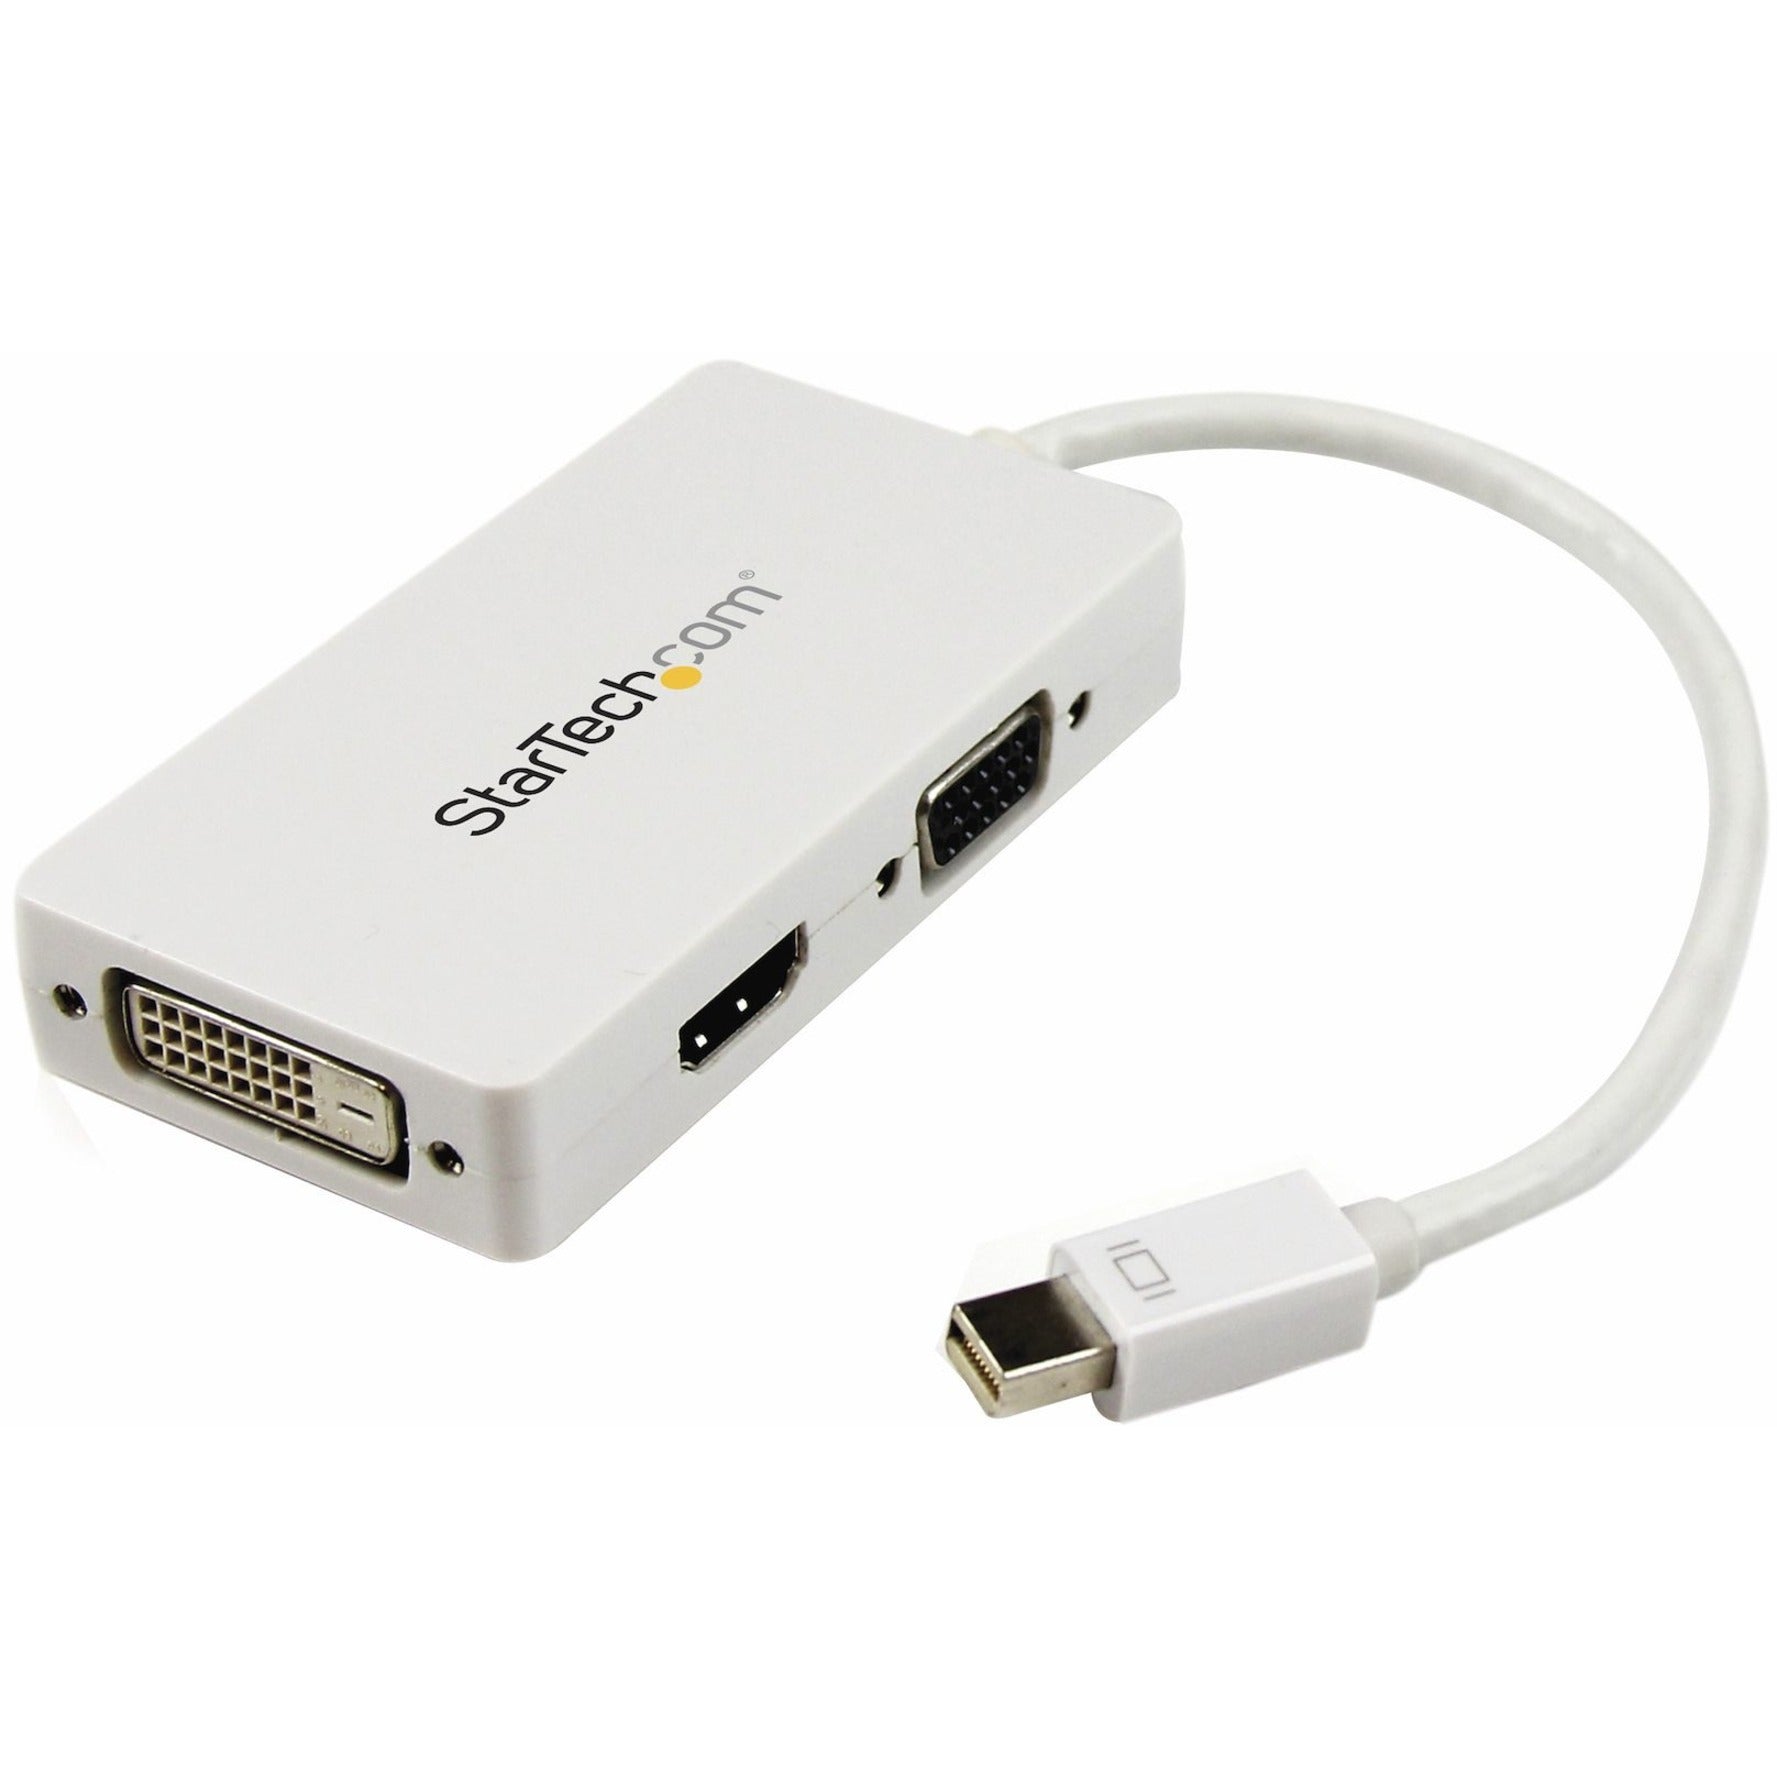 StarTech.com MDP2VGDVHDW Reise A/V Adapter: 3-in-1 Mini DisplayPort zu VGA DVI oder HDMI Konverter Weiß